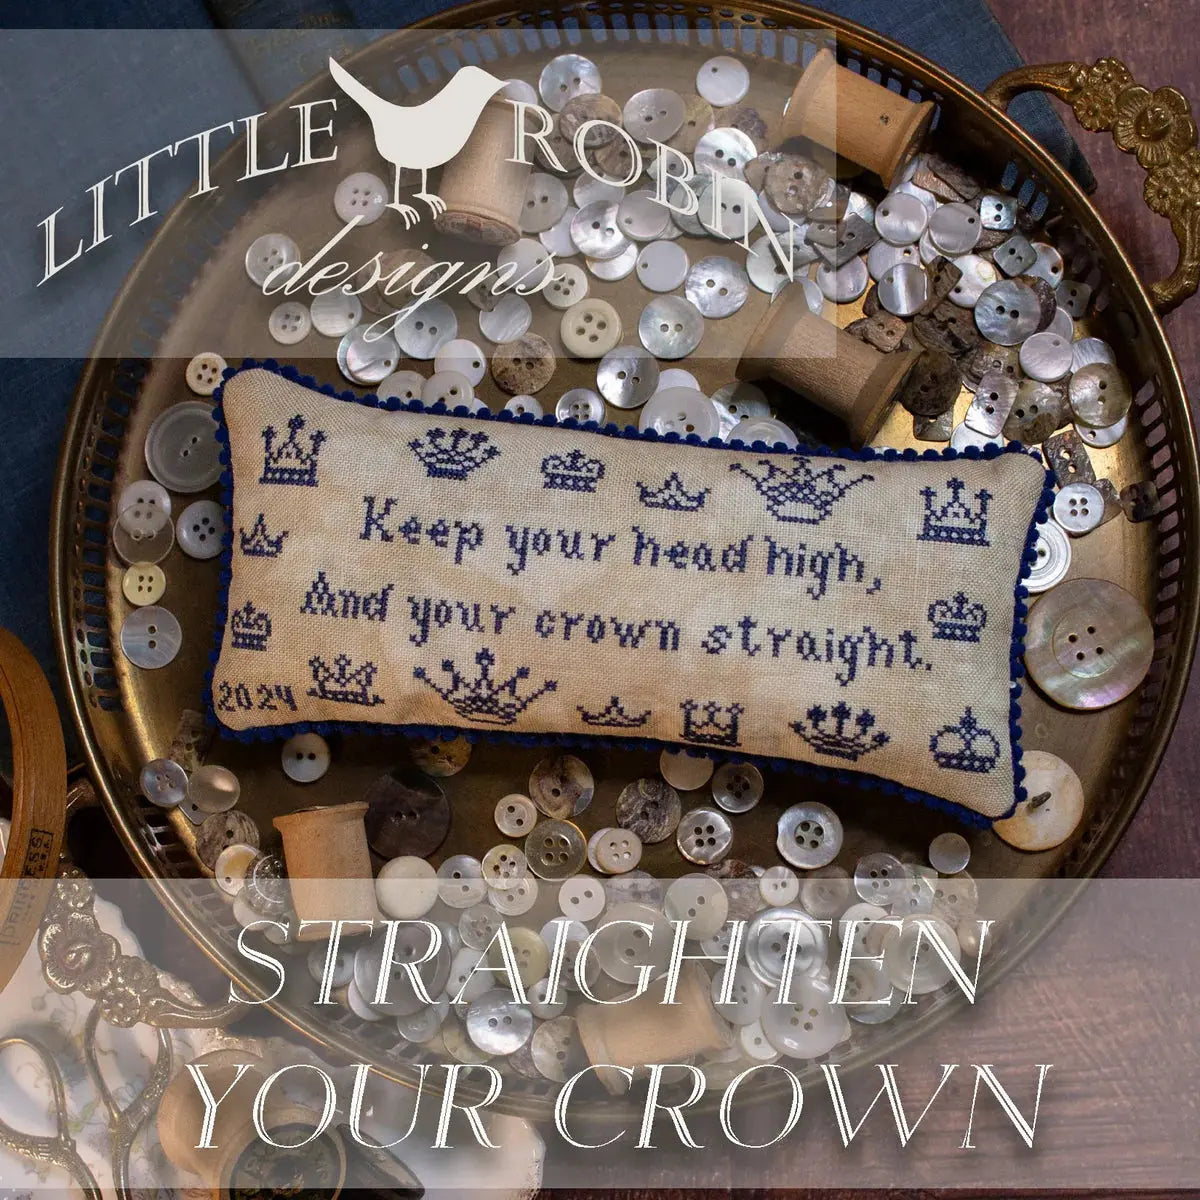 Straighten Your Crown by Little Robin Designs (Pre-order) Little Robin Designs